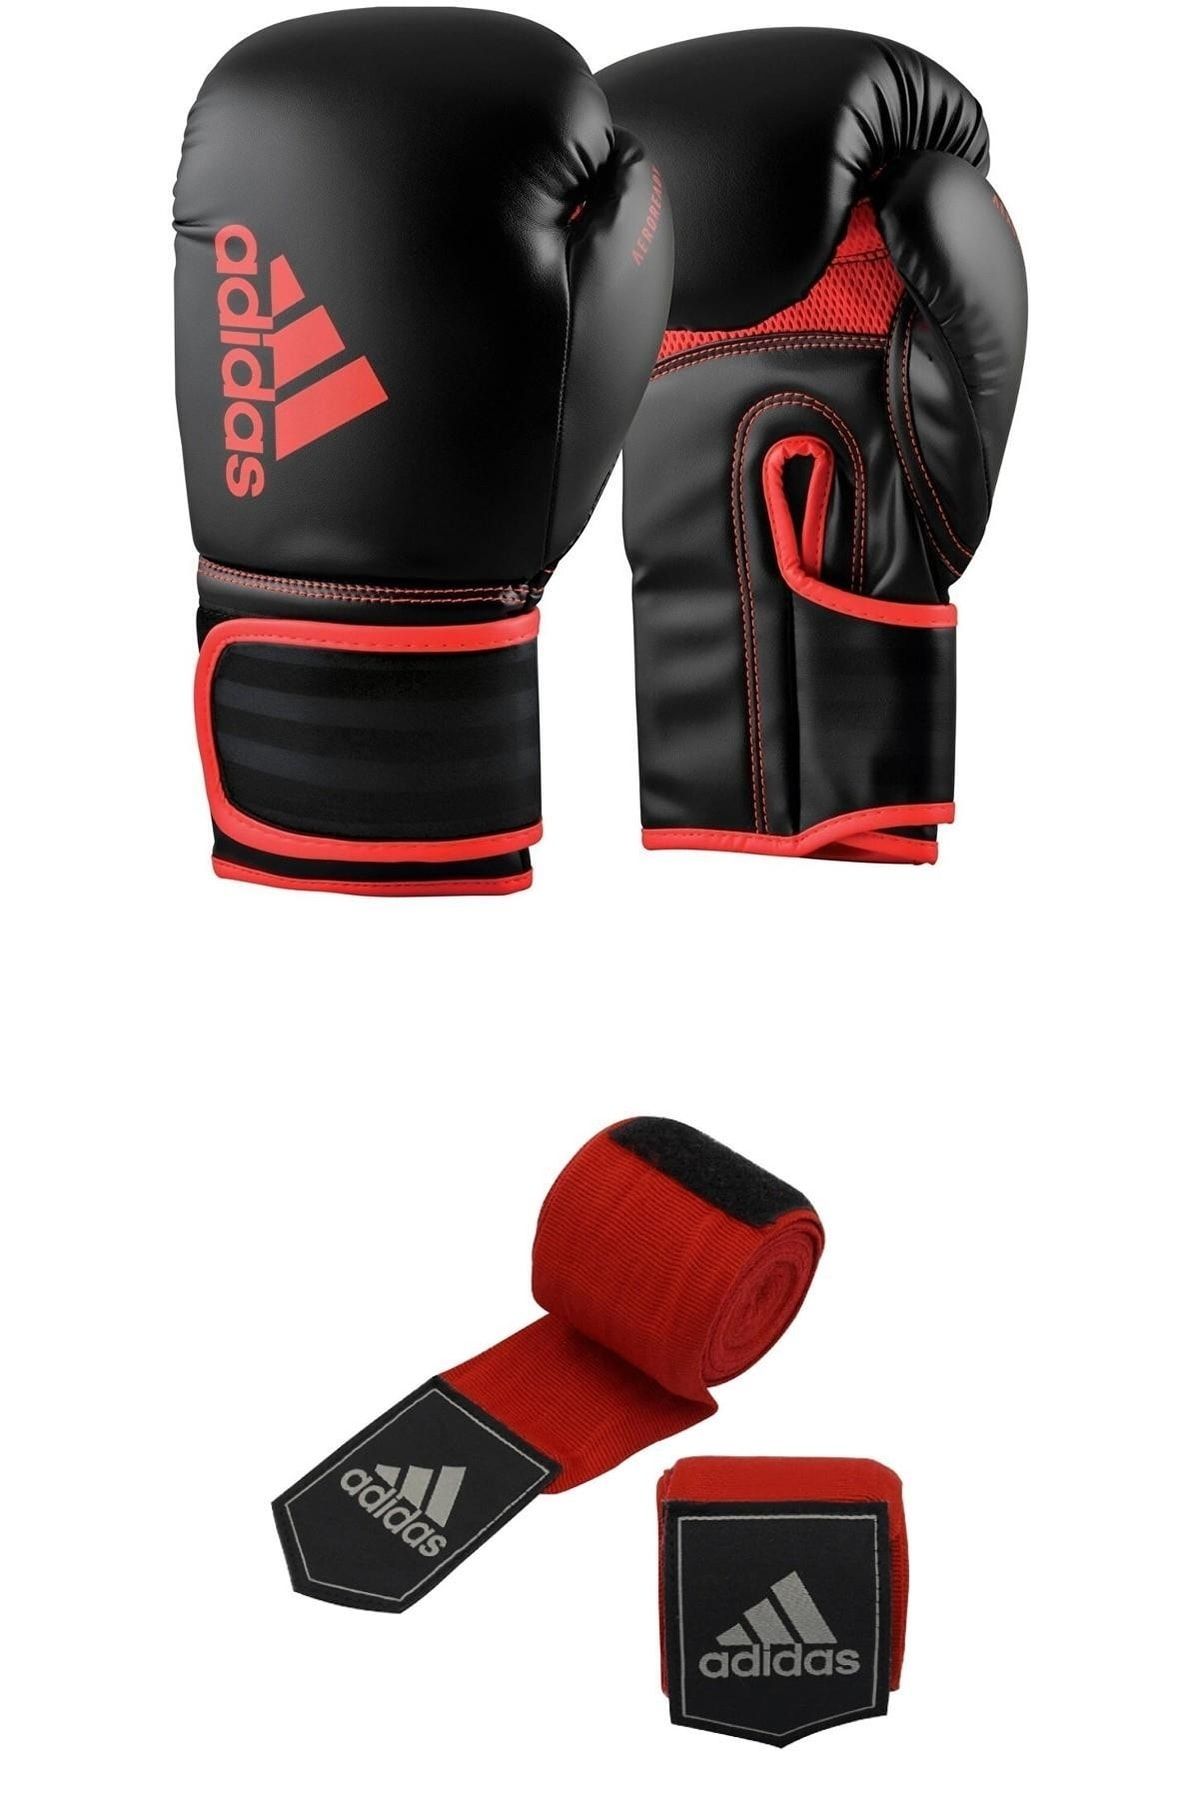 adidas Adıh80 Hybrid80 Antrenman Boks Eldiveni Kırmızı Boxing Gloves Ve Bandaj Boks Bandajı 3